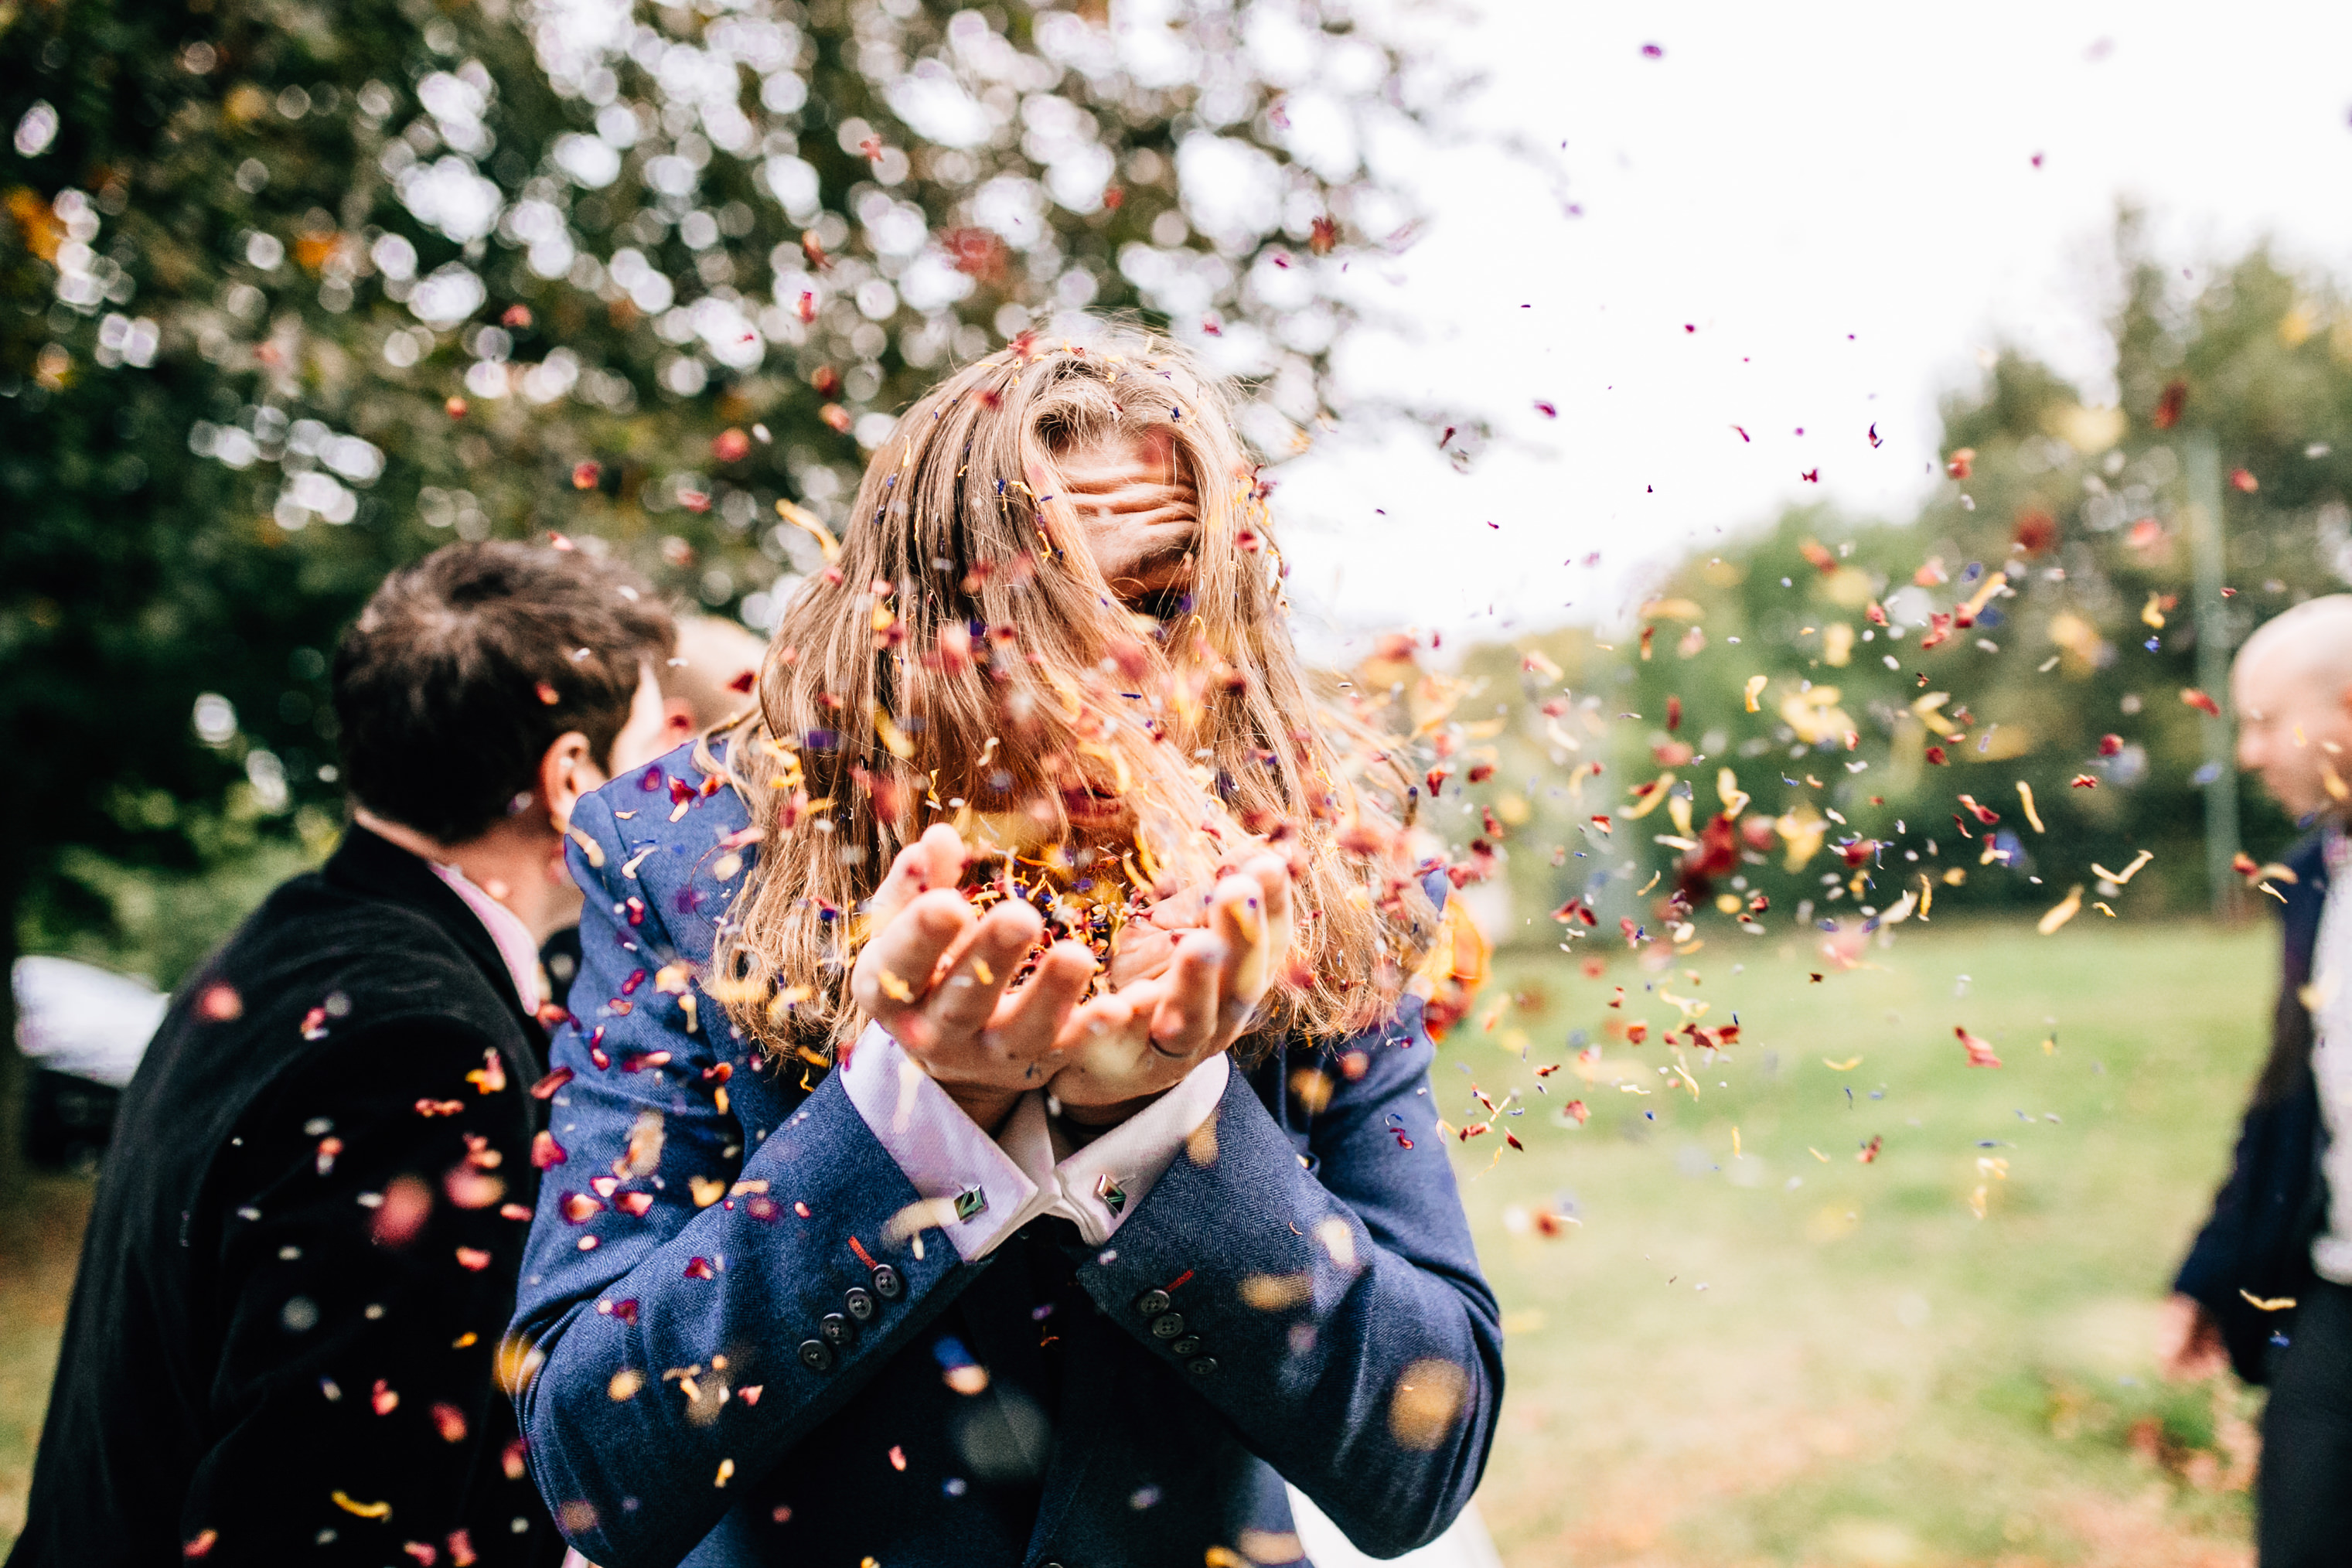 quirky fun autumn wedding in london wedding photographer confetti